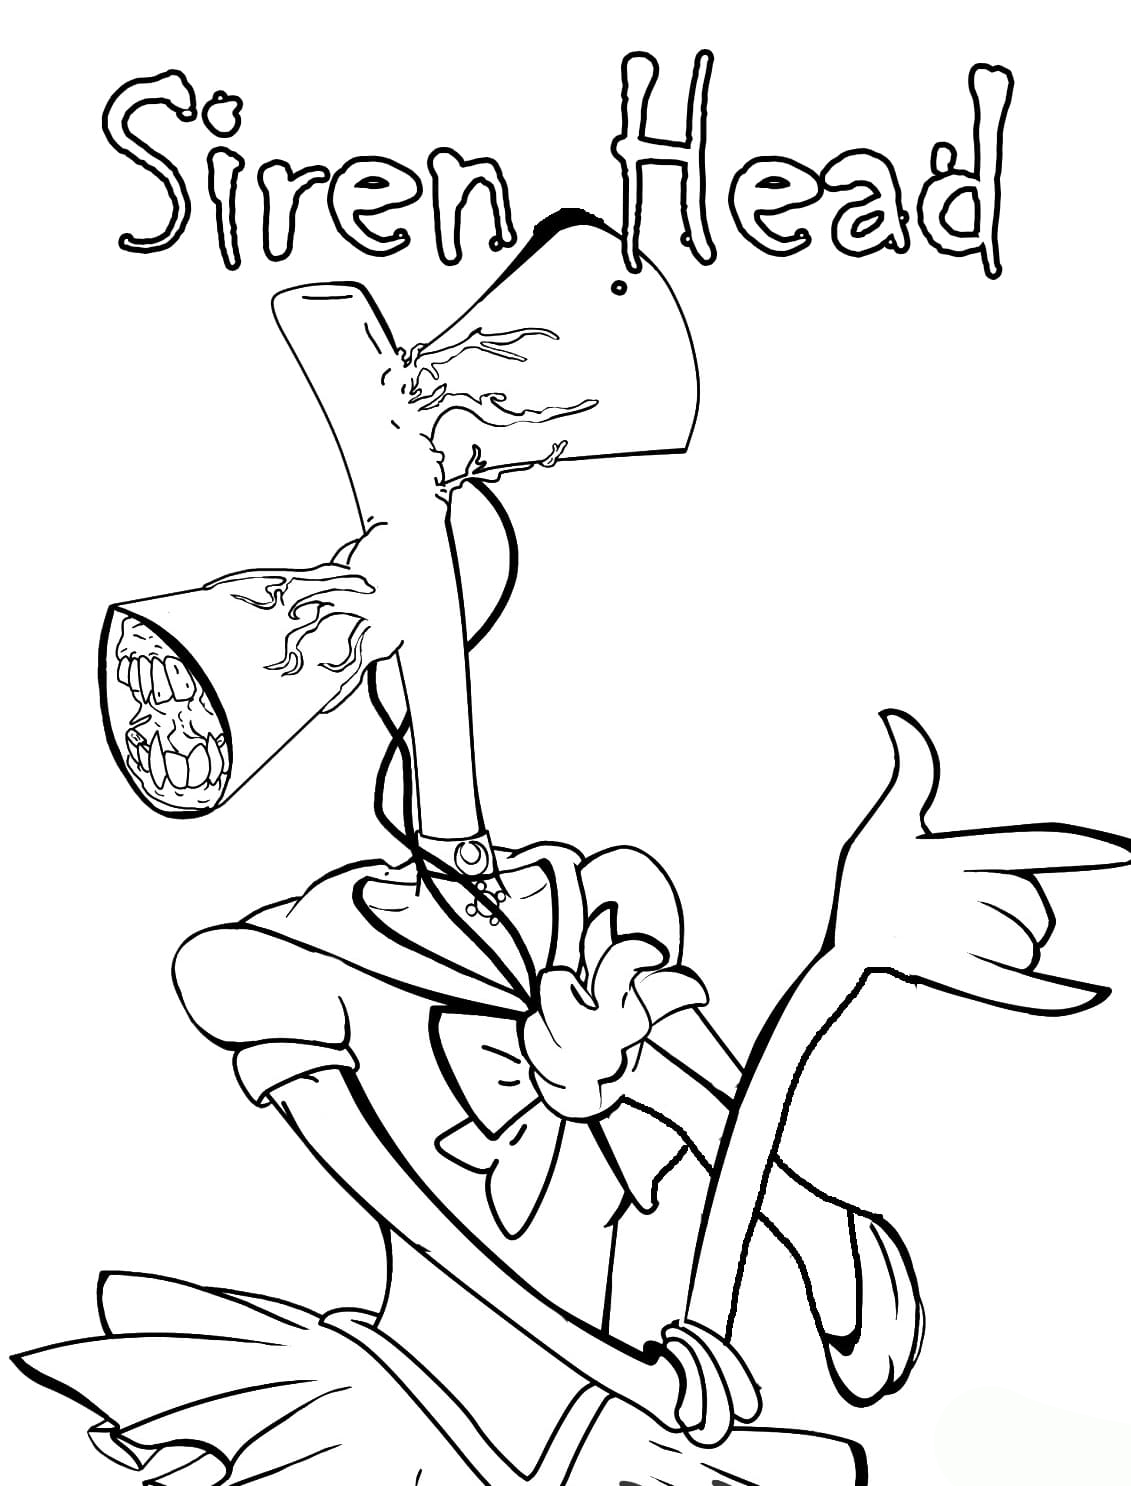 Para Colorear Siren Head En formato A4